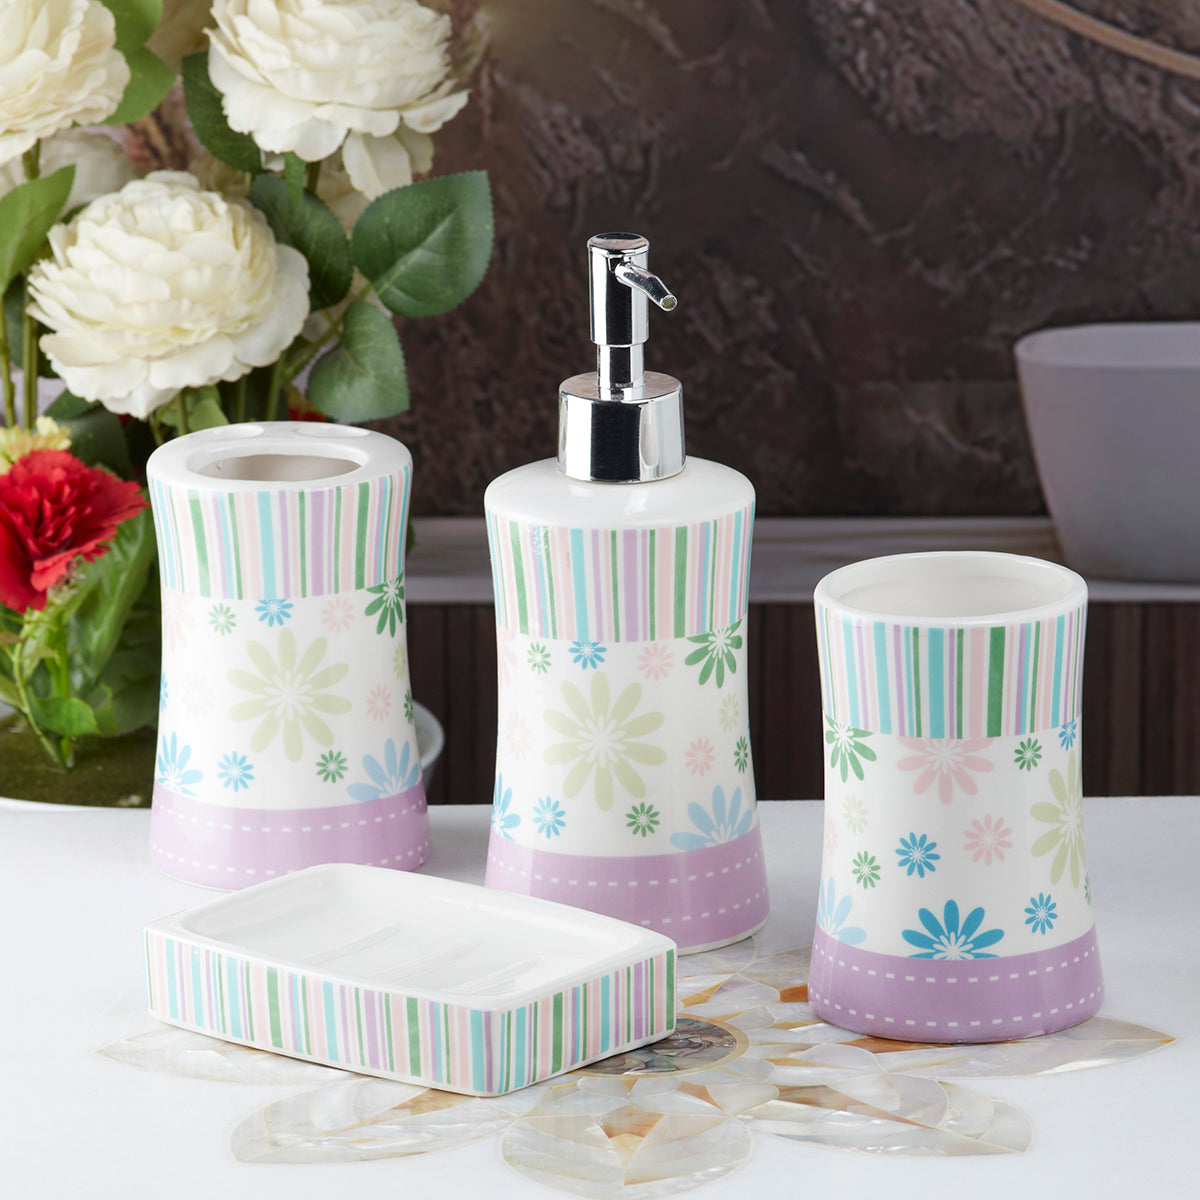 Ceramic Bathroom Accessories Set of 4 Bath Set with Soap Dispenser (10107)